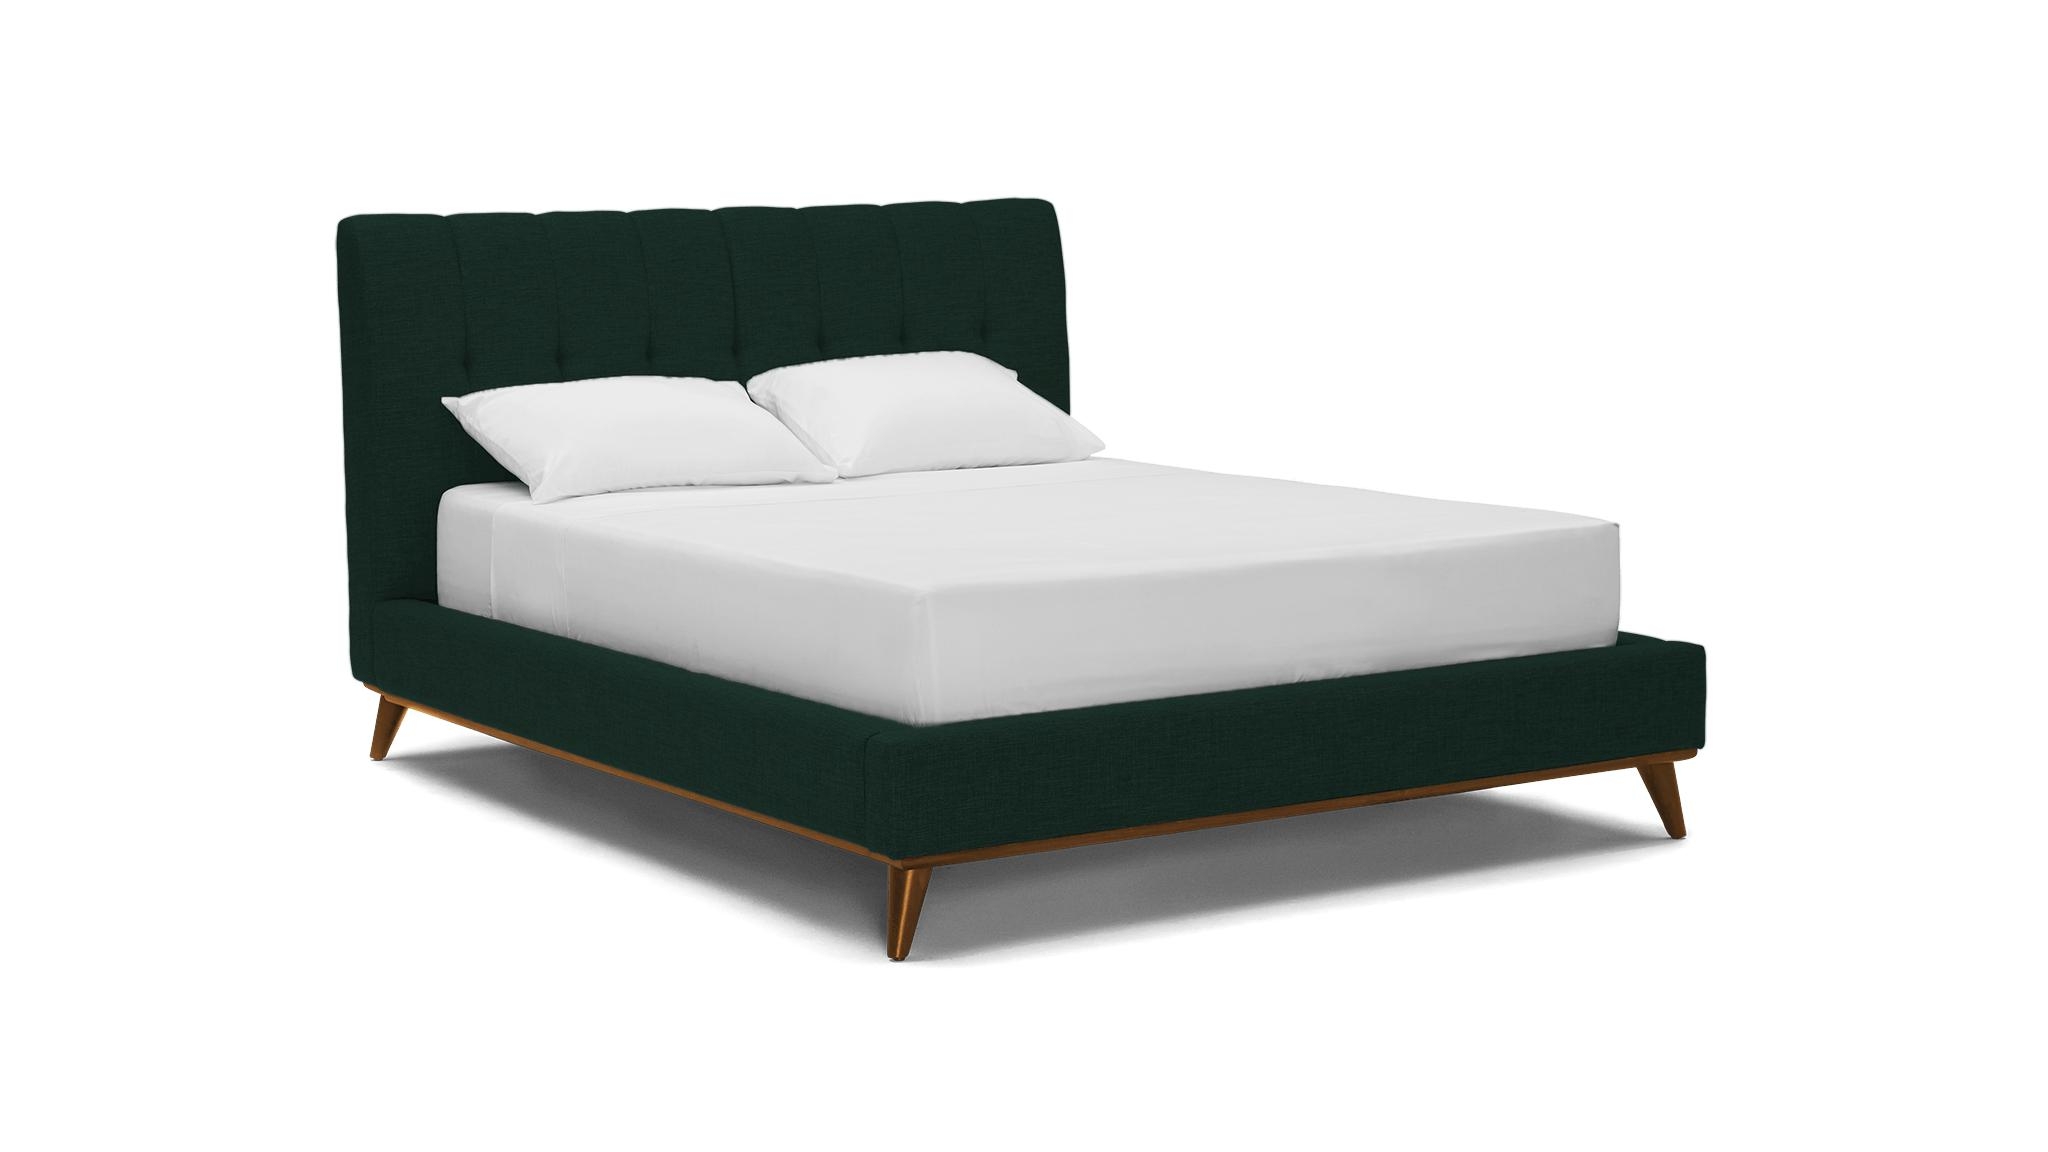 Green Hughes Mid Century Modern Bed - Royale Evergreen - Mocha - Queen - Image 1